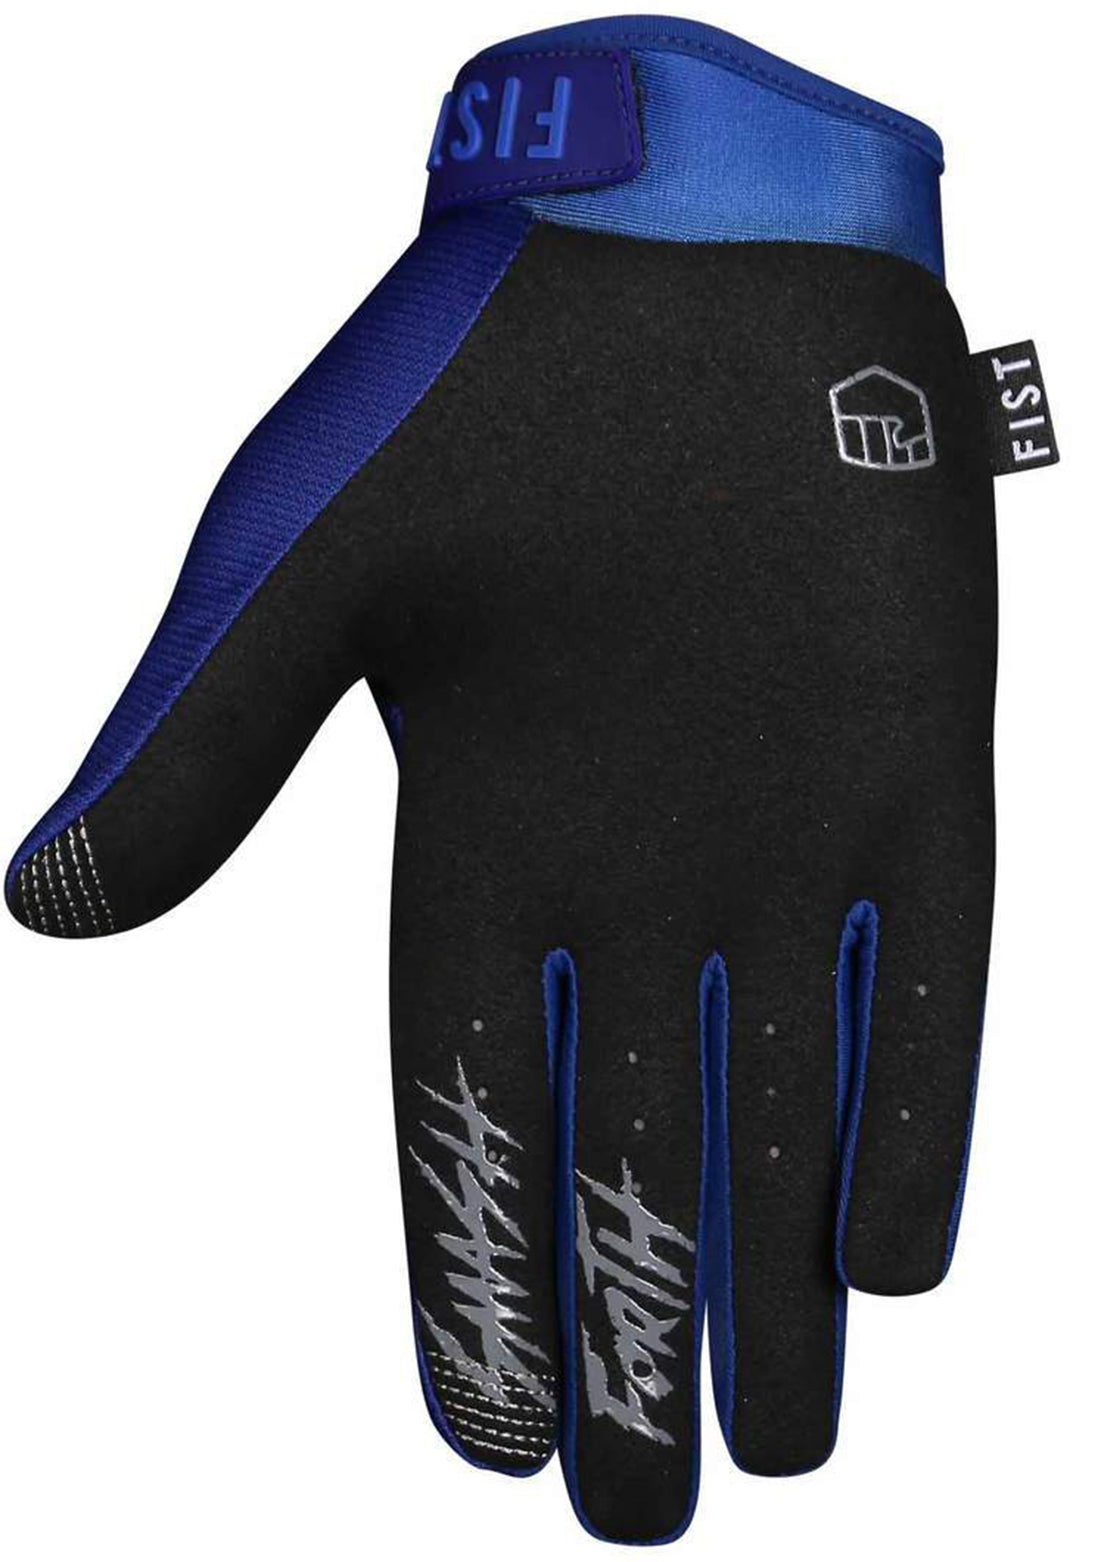 Fist Handwear Stocker Bike Gloves Blue